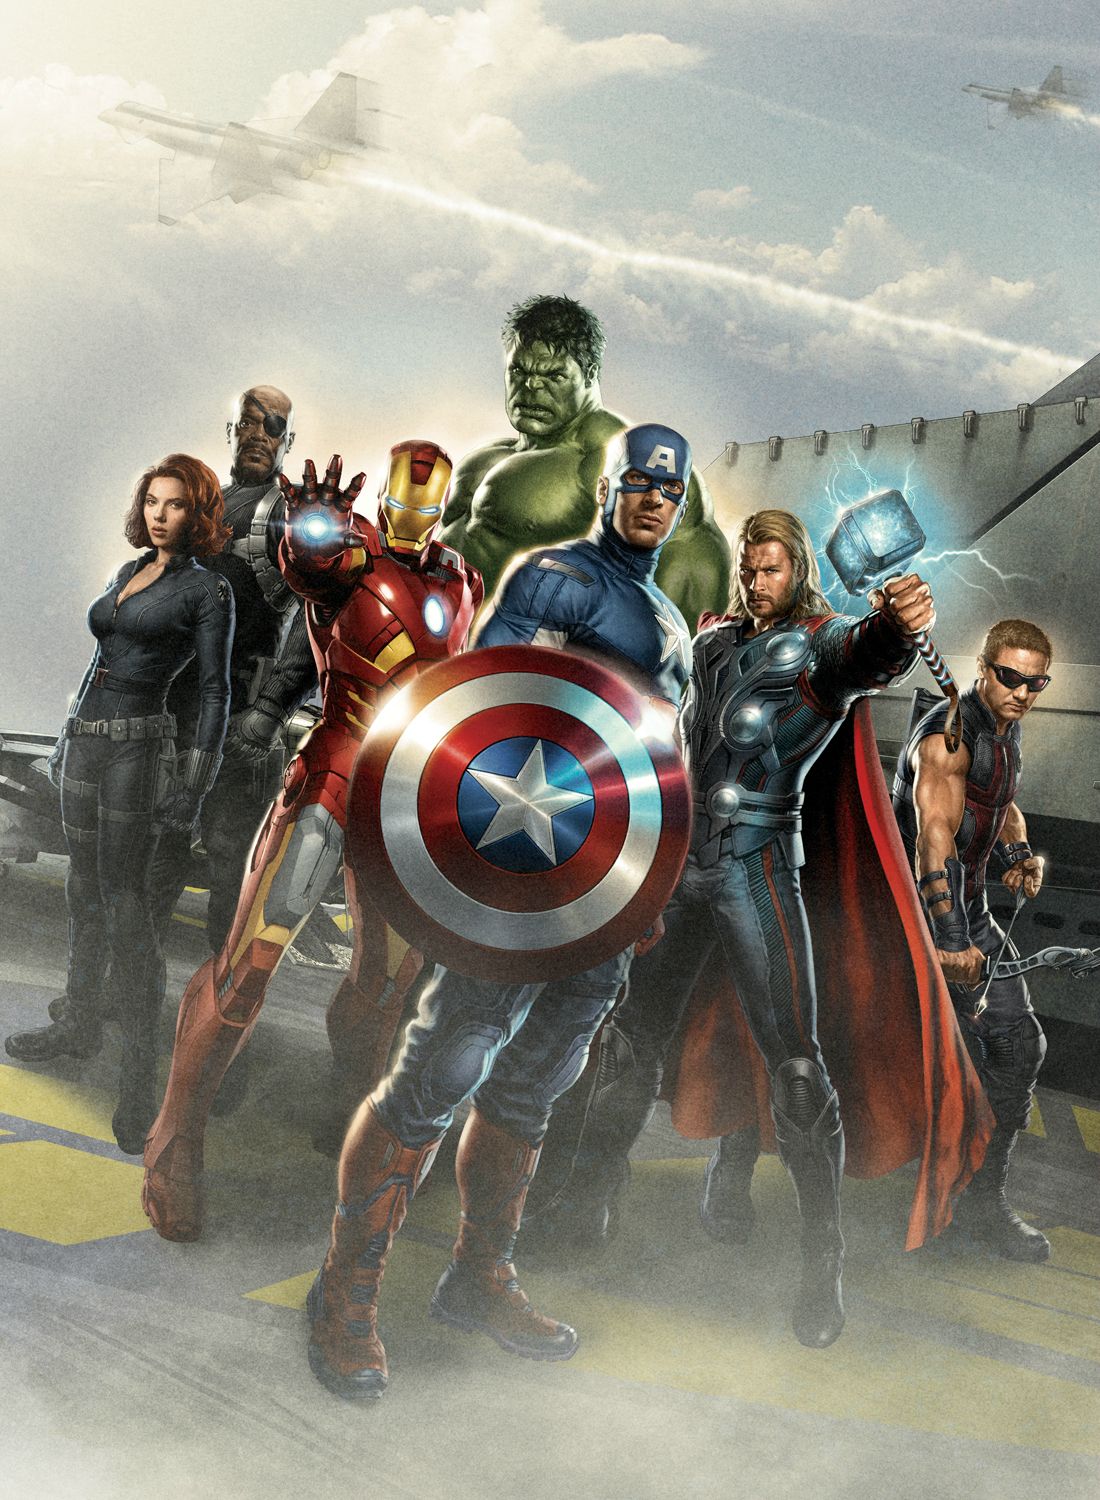  Preliminary poster for Avengers comic